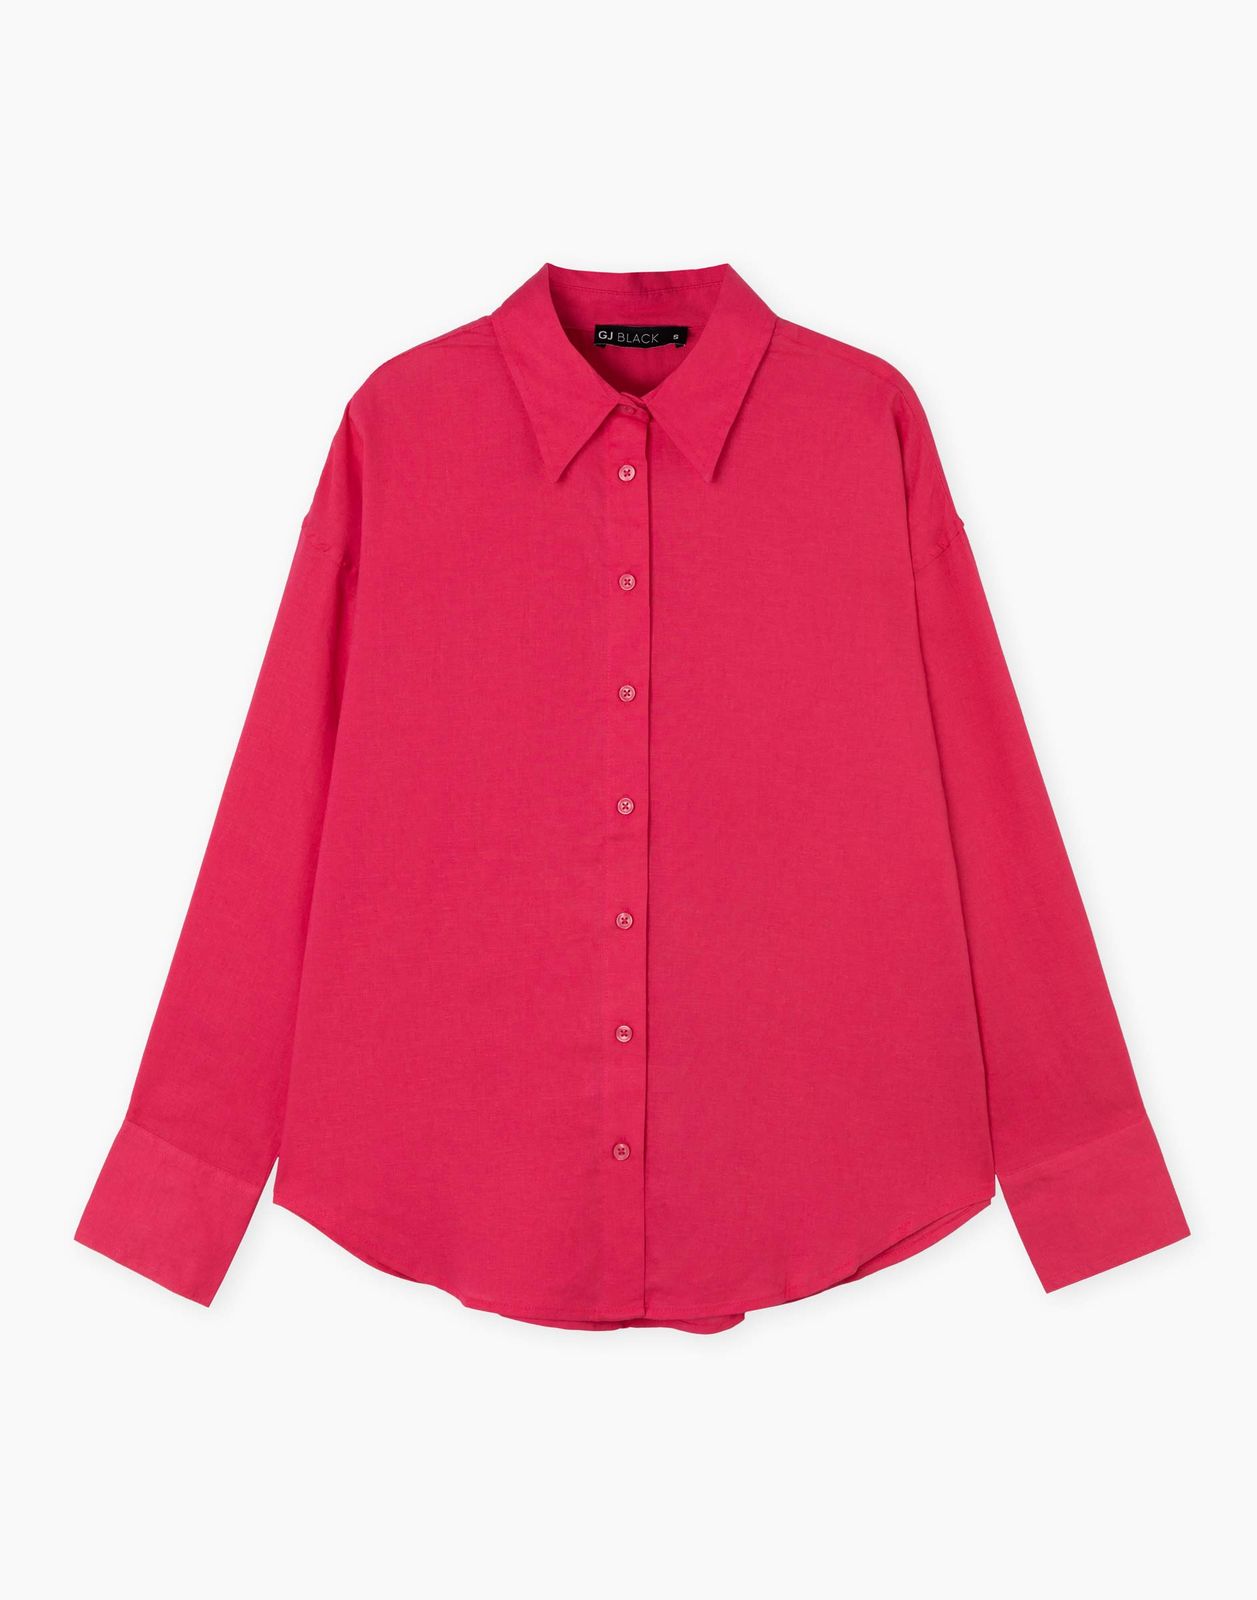 Рубашка женская Gloria Jeans GWT003851 розовый L/170